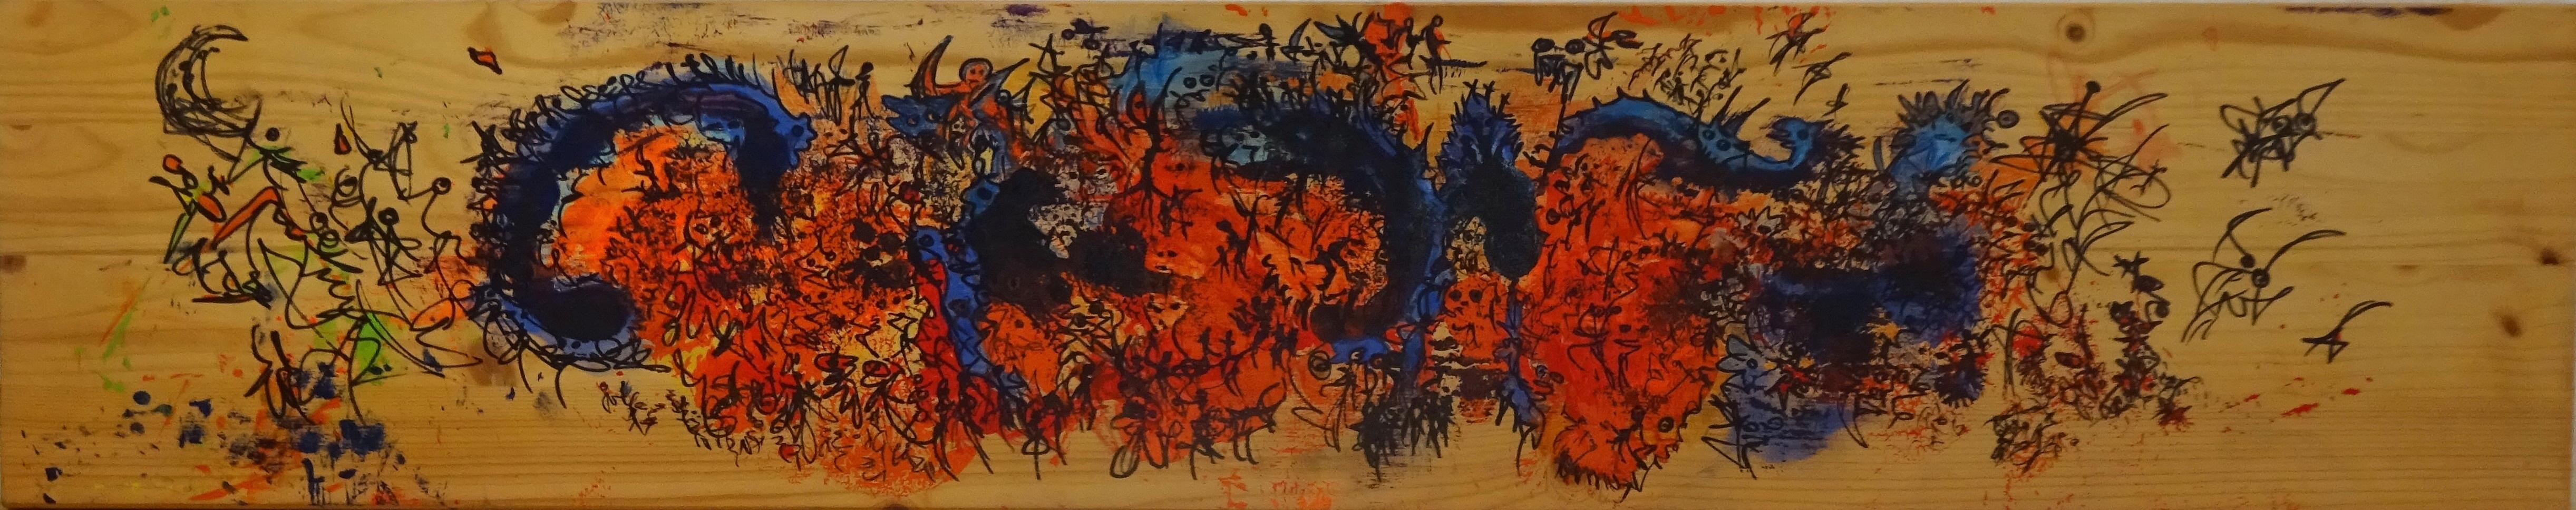 DragonBirth - Painting by klekkso